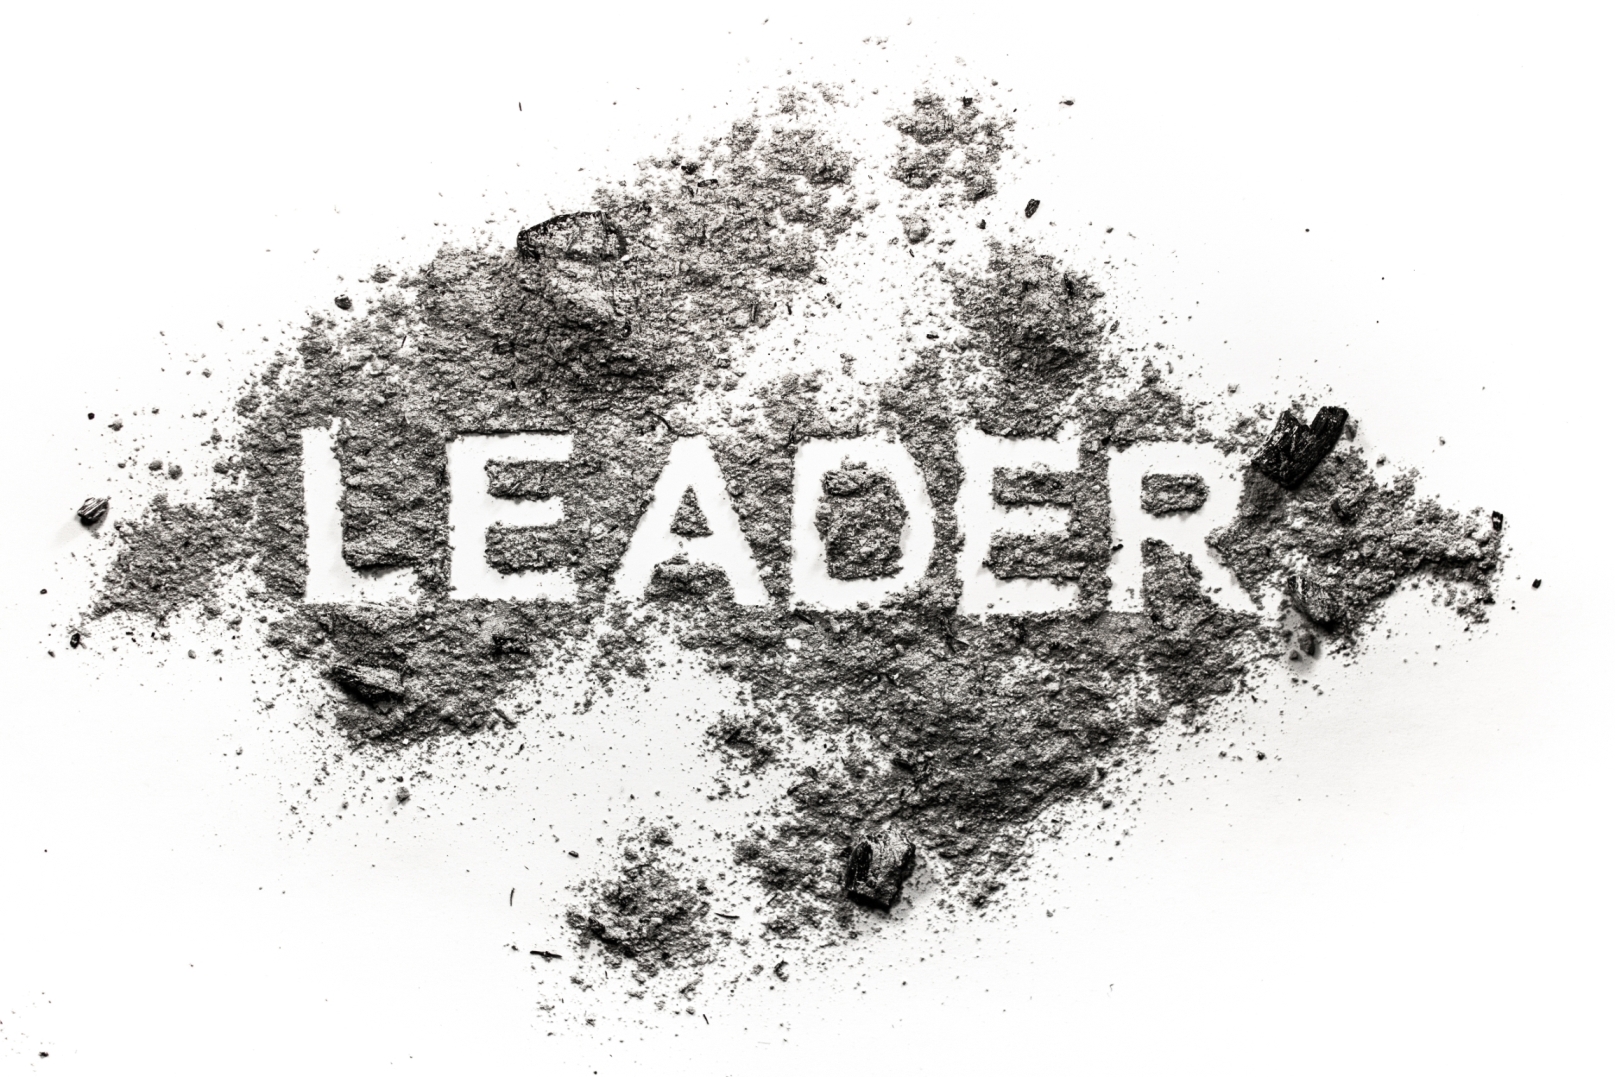 Leader word written in ash, dirt or dust